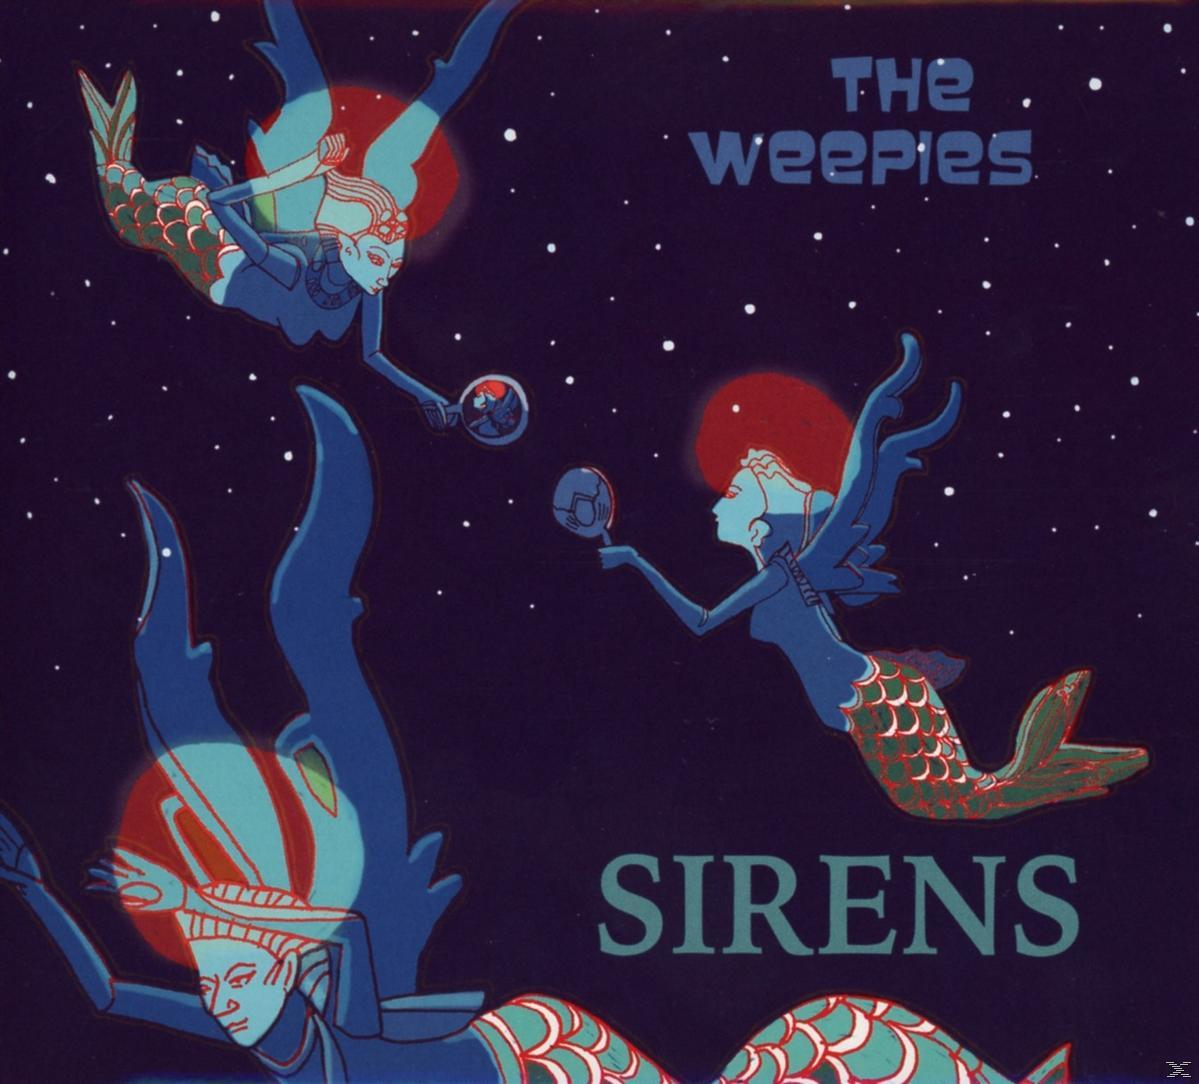 The Weepies - Sirens - (CD)